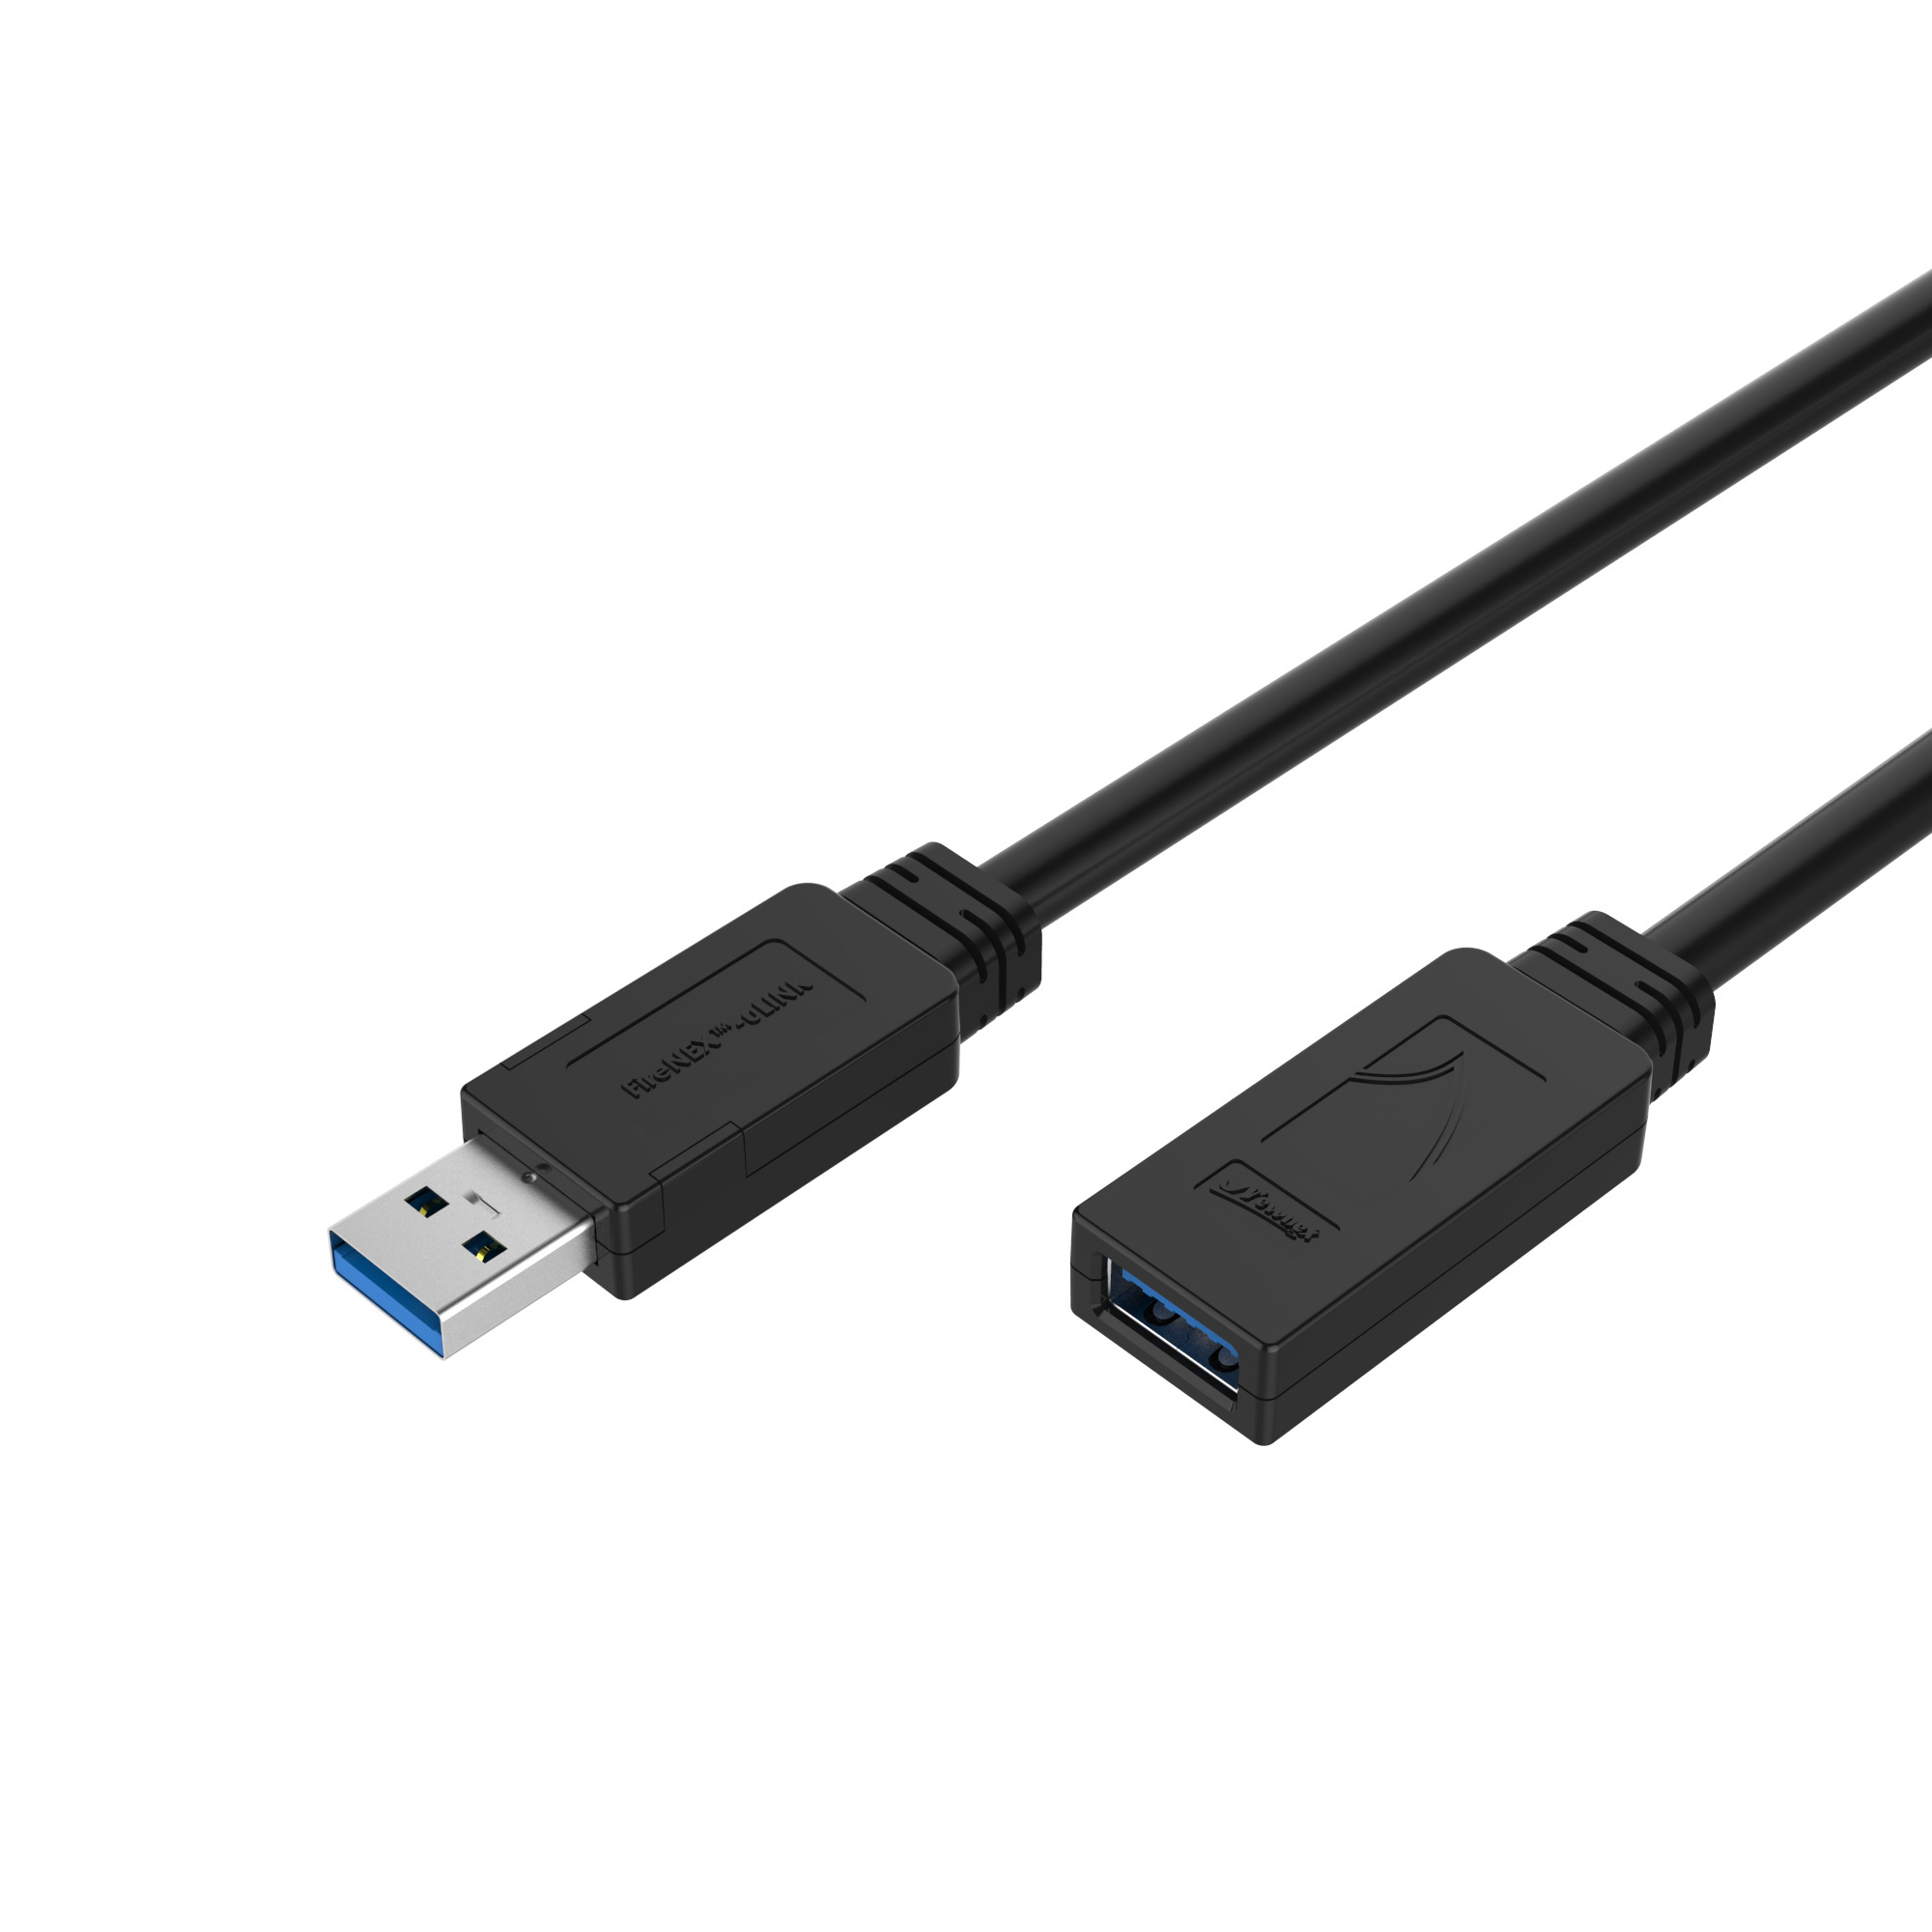 Newnex Firenex USB 3.0 Active Cable A/Male to A/Female w/ Slim Profile Repeater (5m)